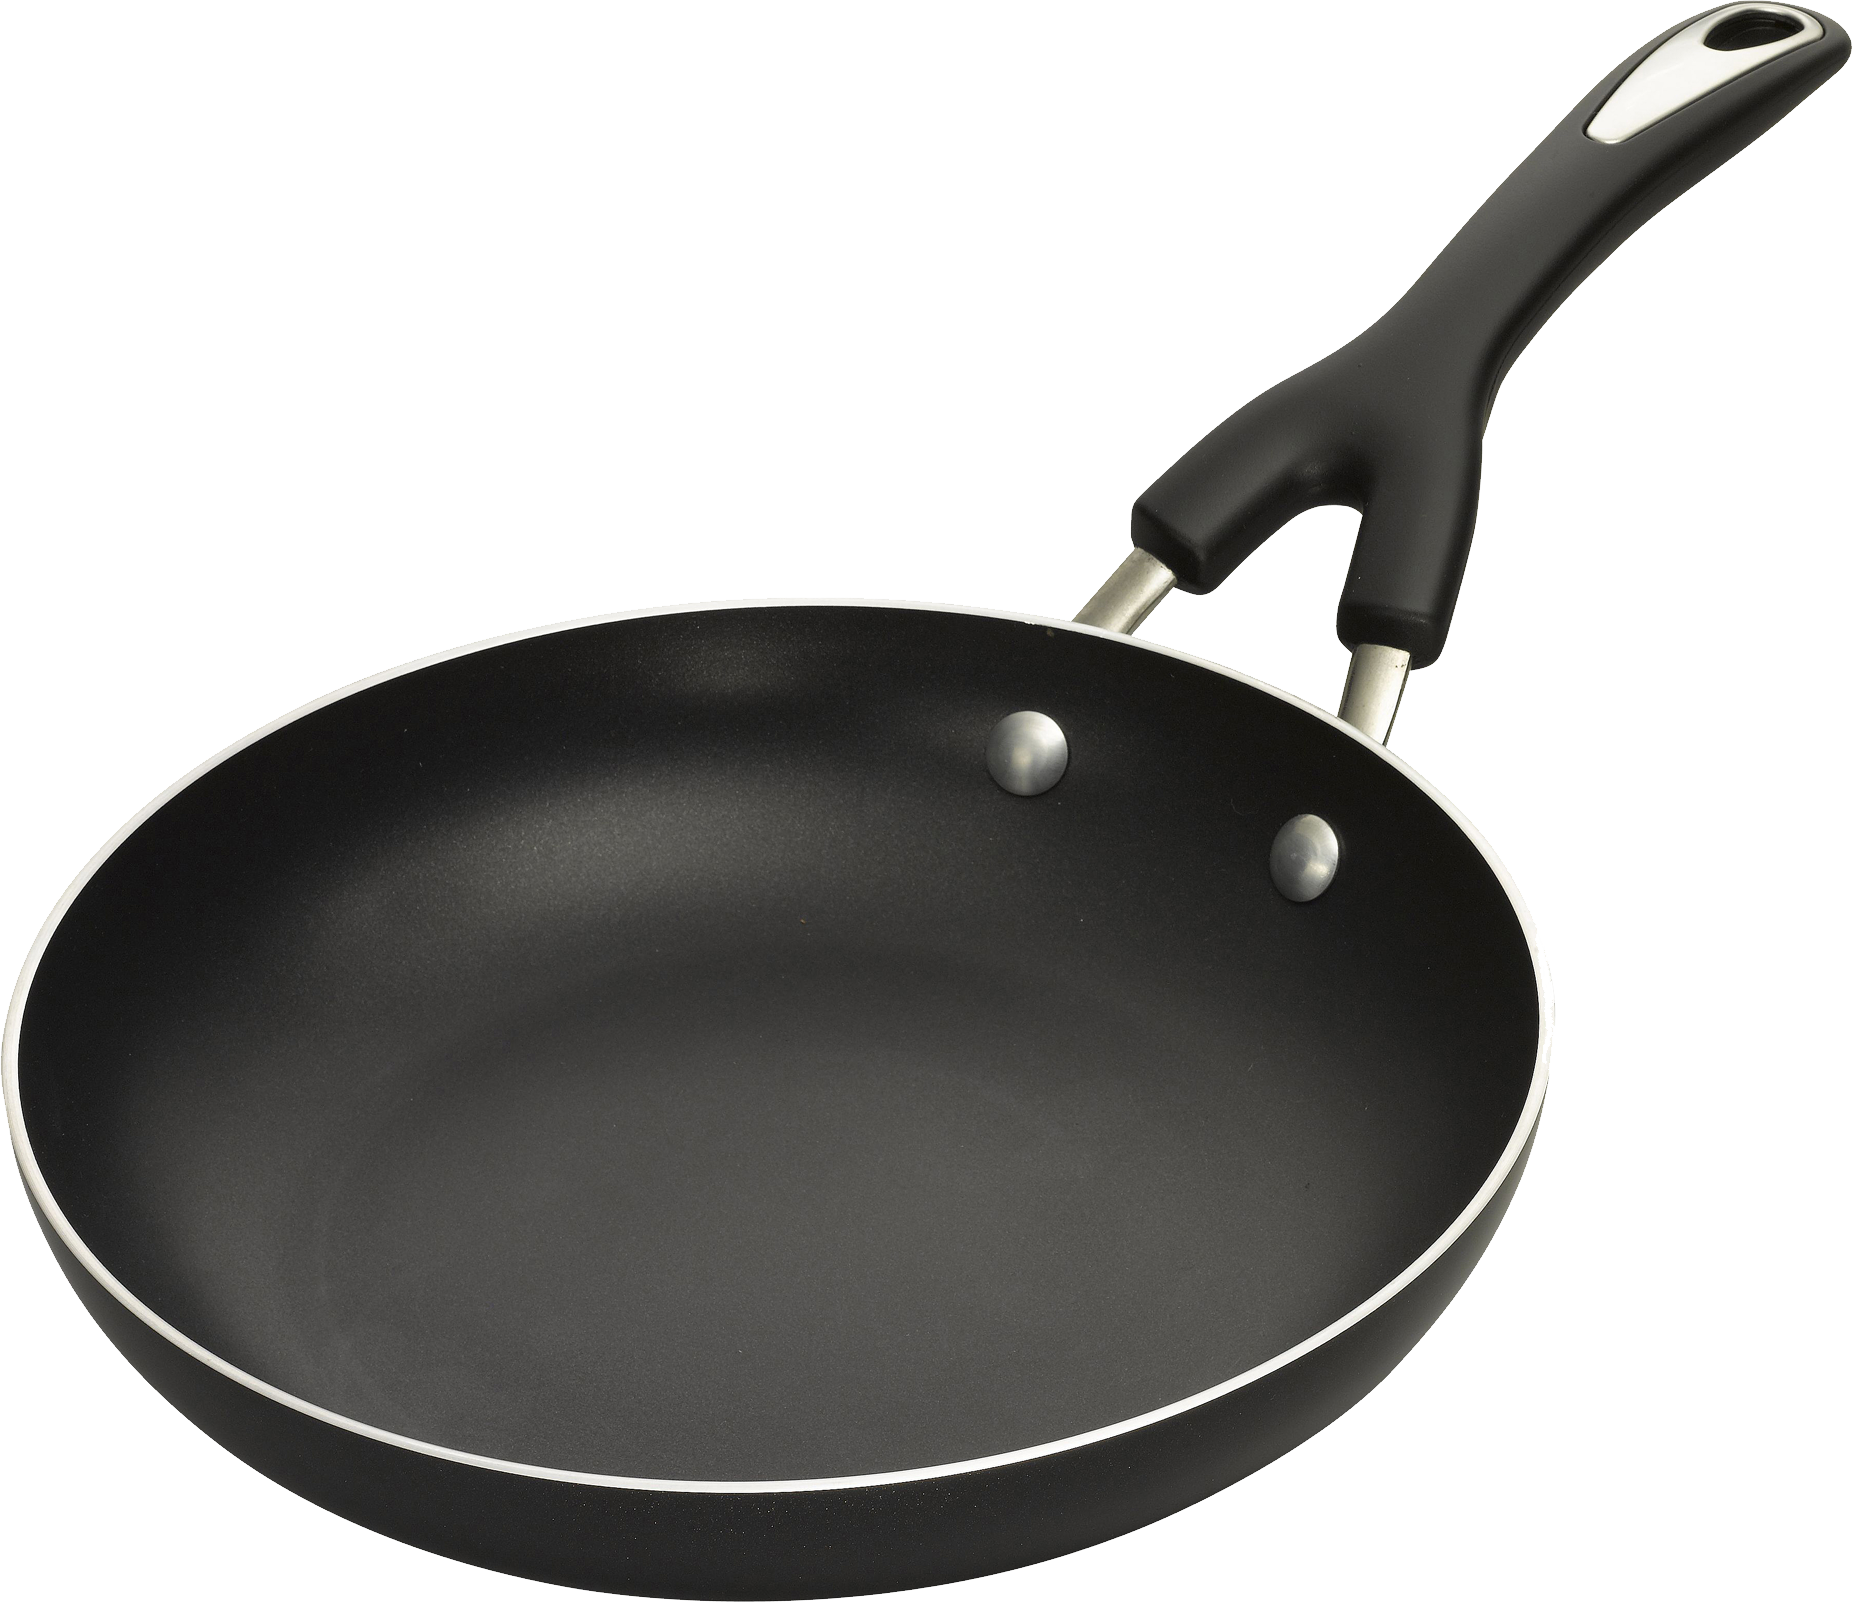 Frying Pan Png Image - Frying Pan, Transparent background PNG HD thumbnail